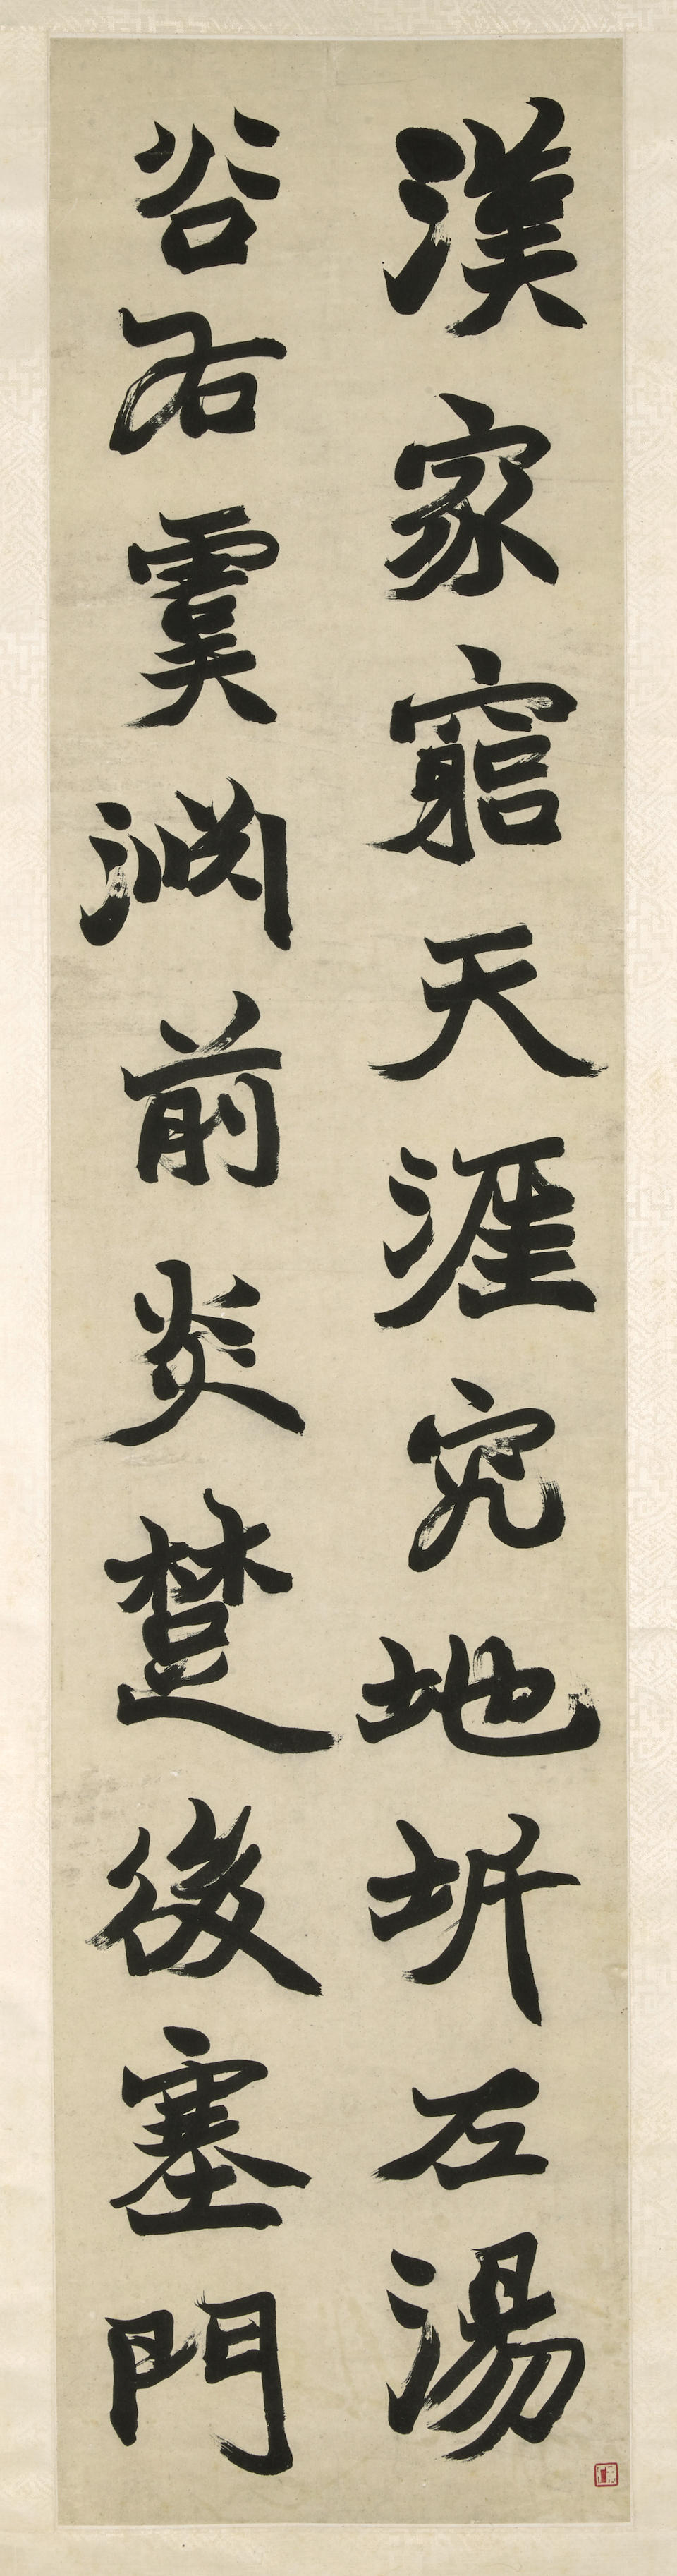 Zhao Zhiqian (1829-1884) Calligraphy in Running / Standard Script (4)